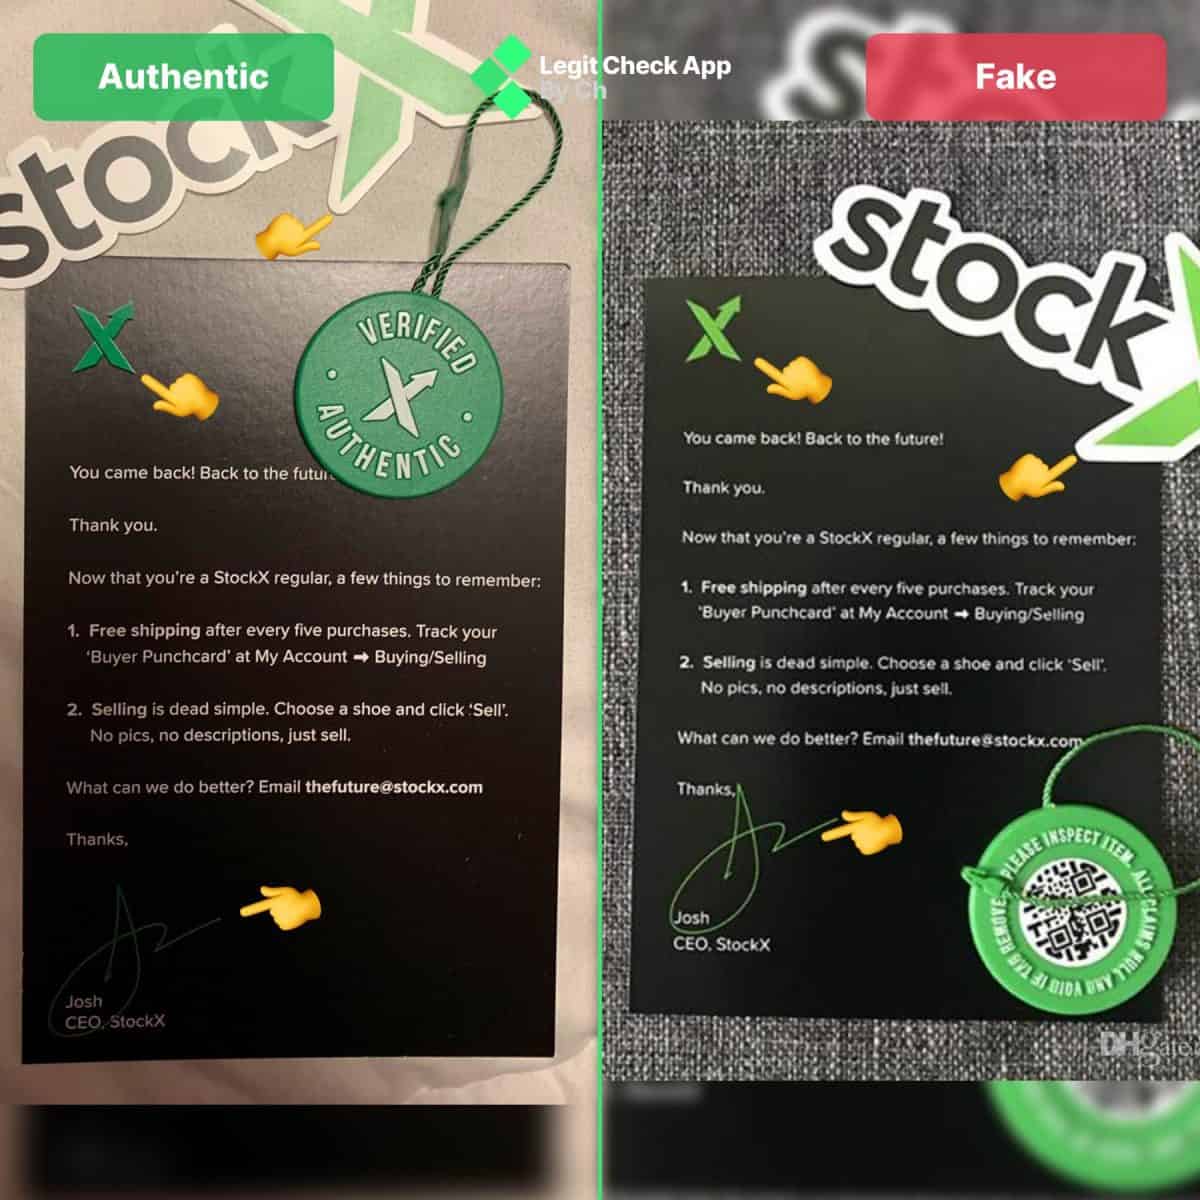 StockX Tag Real Vs Fake Legit Check 